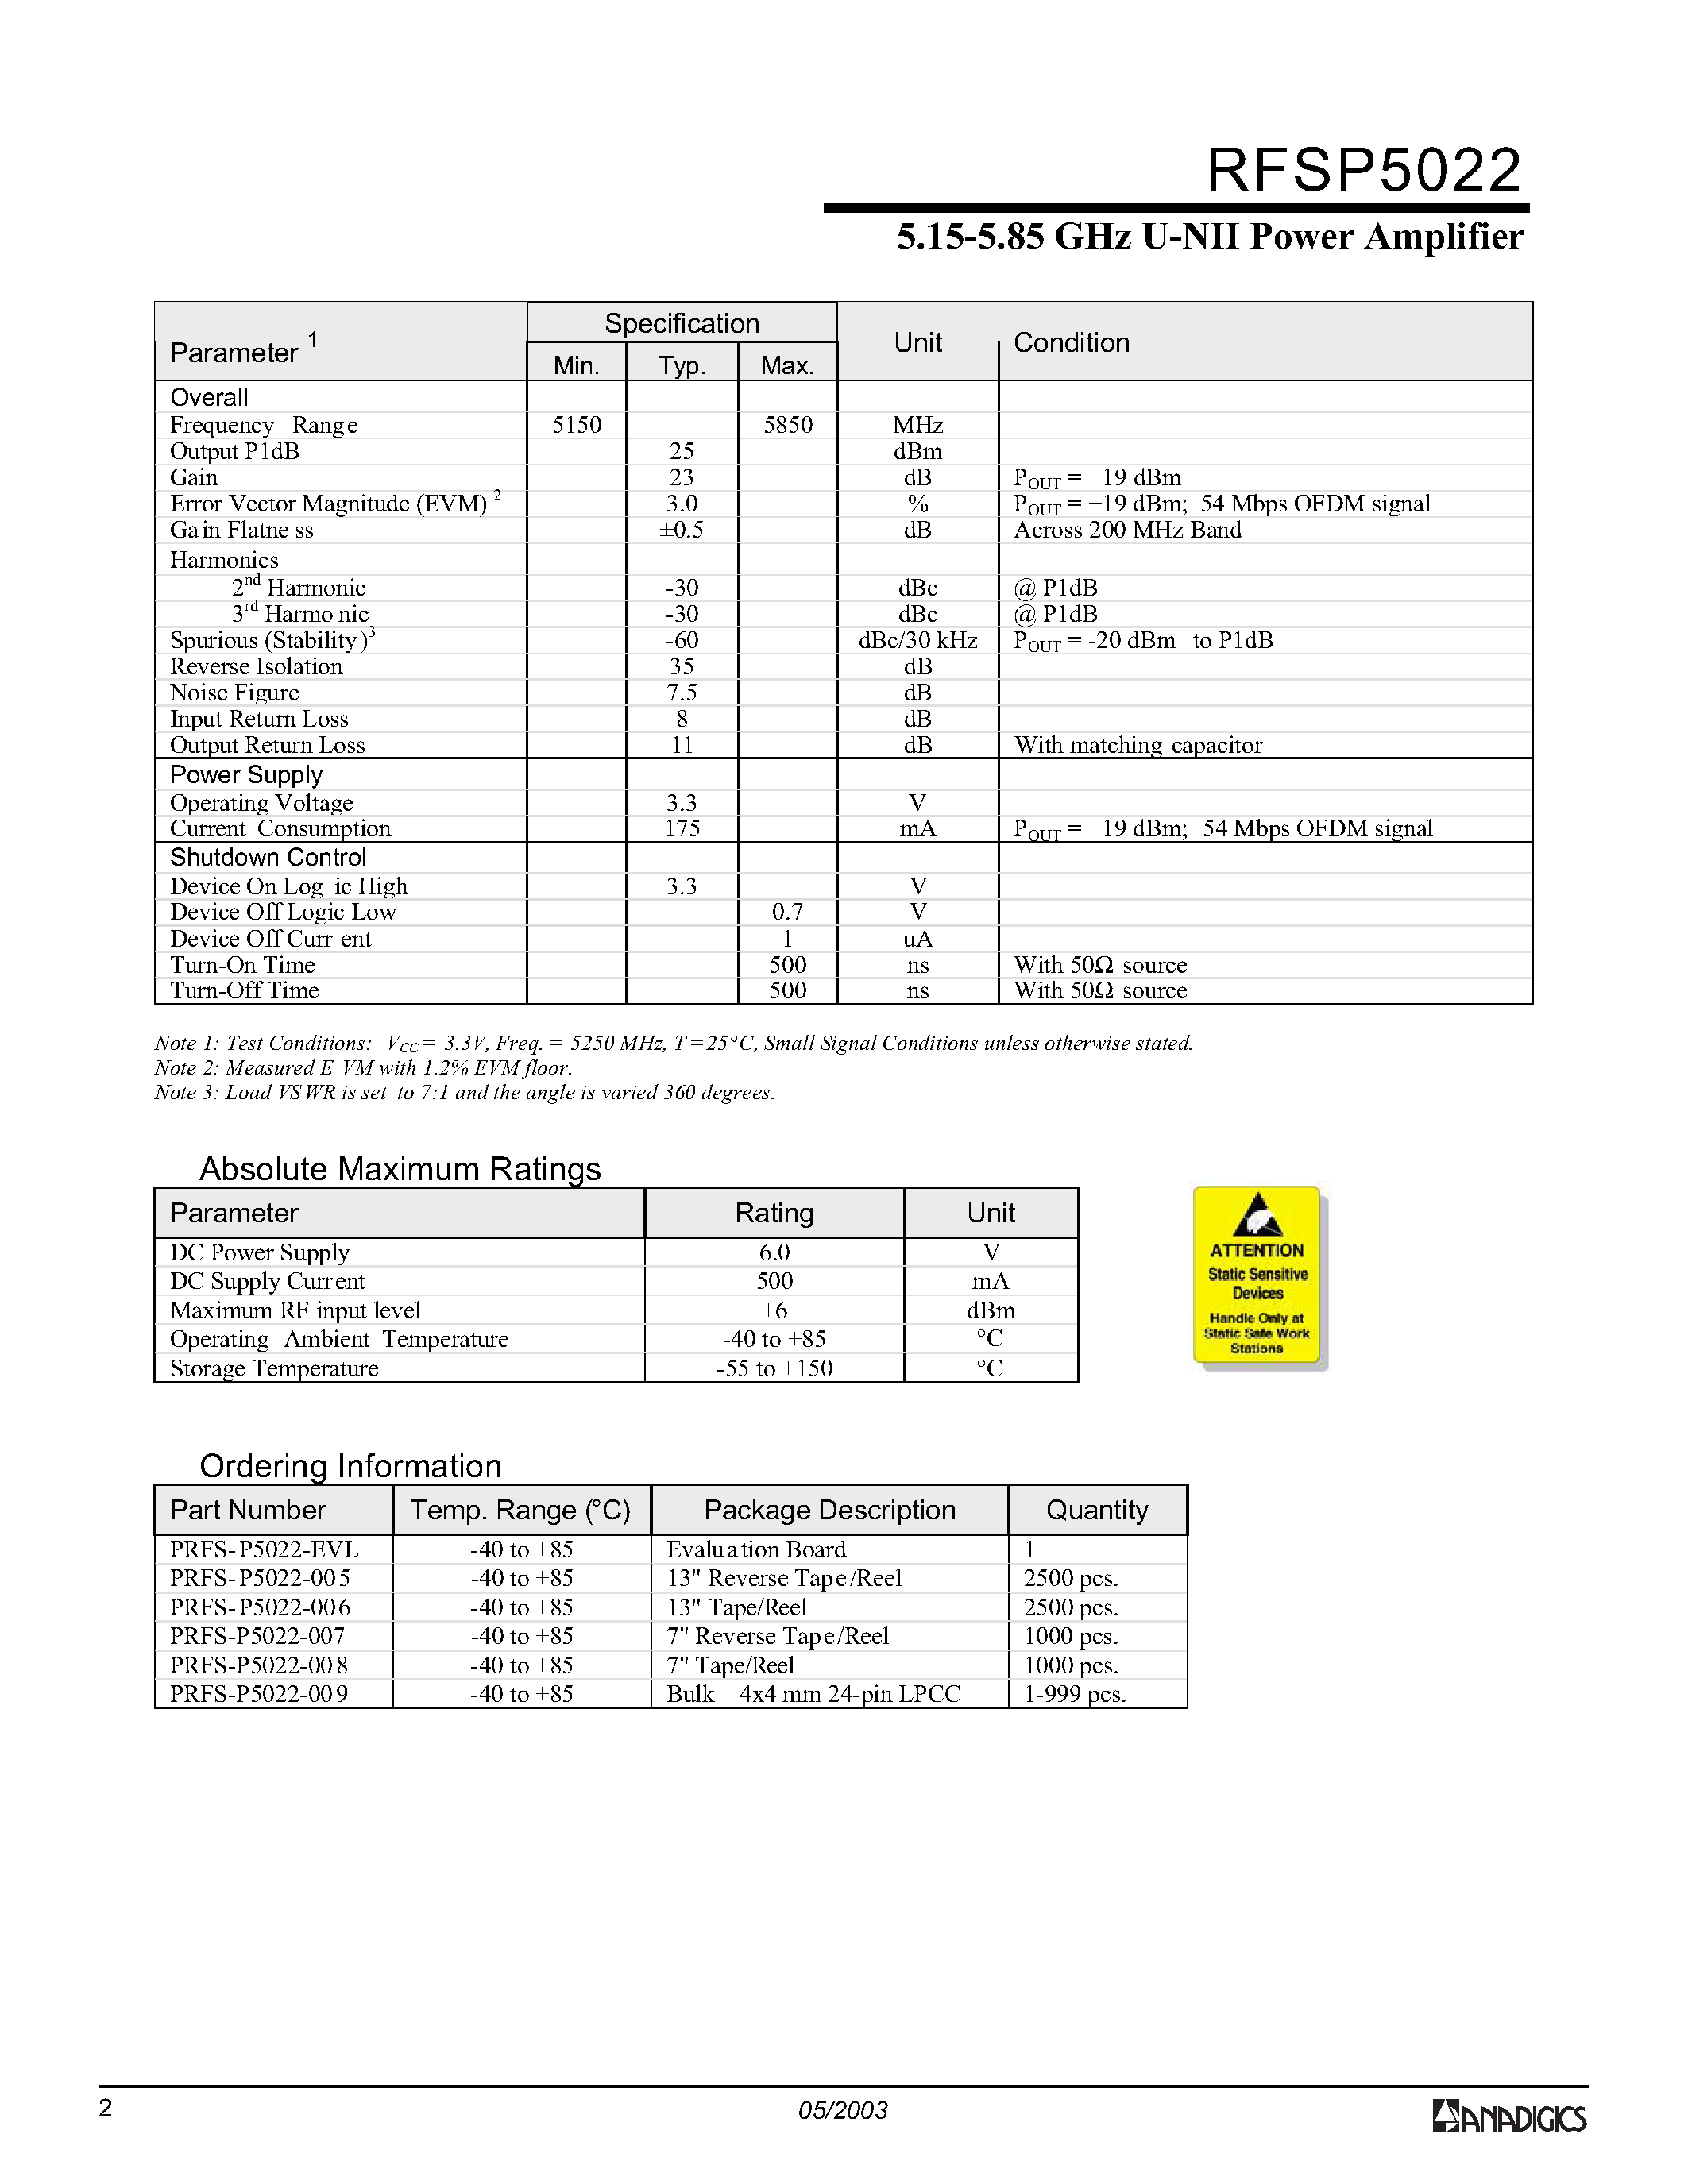 Datasheet PRFS-P5022-007 - 5.15-5.85 GHz U-NII Power Amplifier page 2